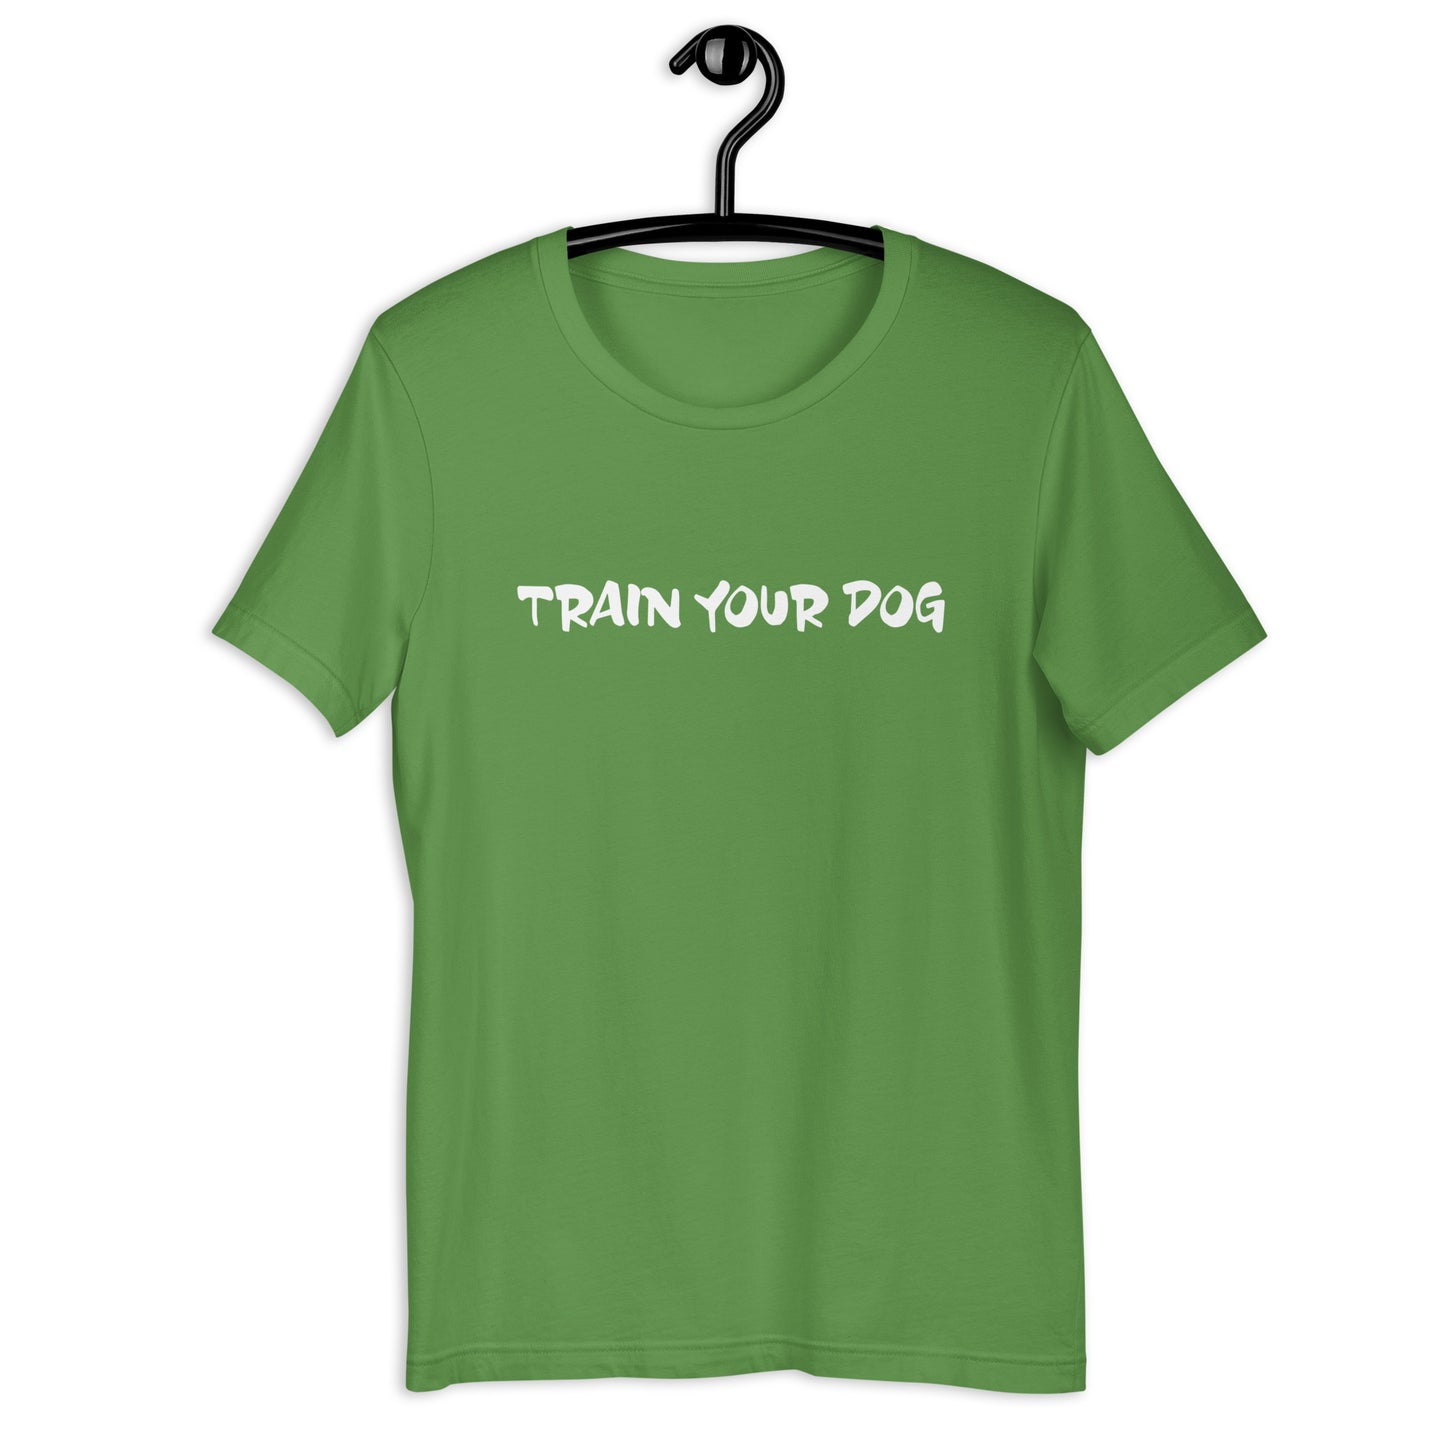 TRAIN YOUR DOG - Unisex t-shirt